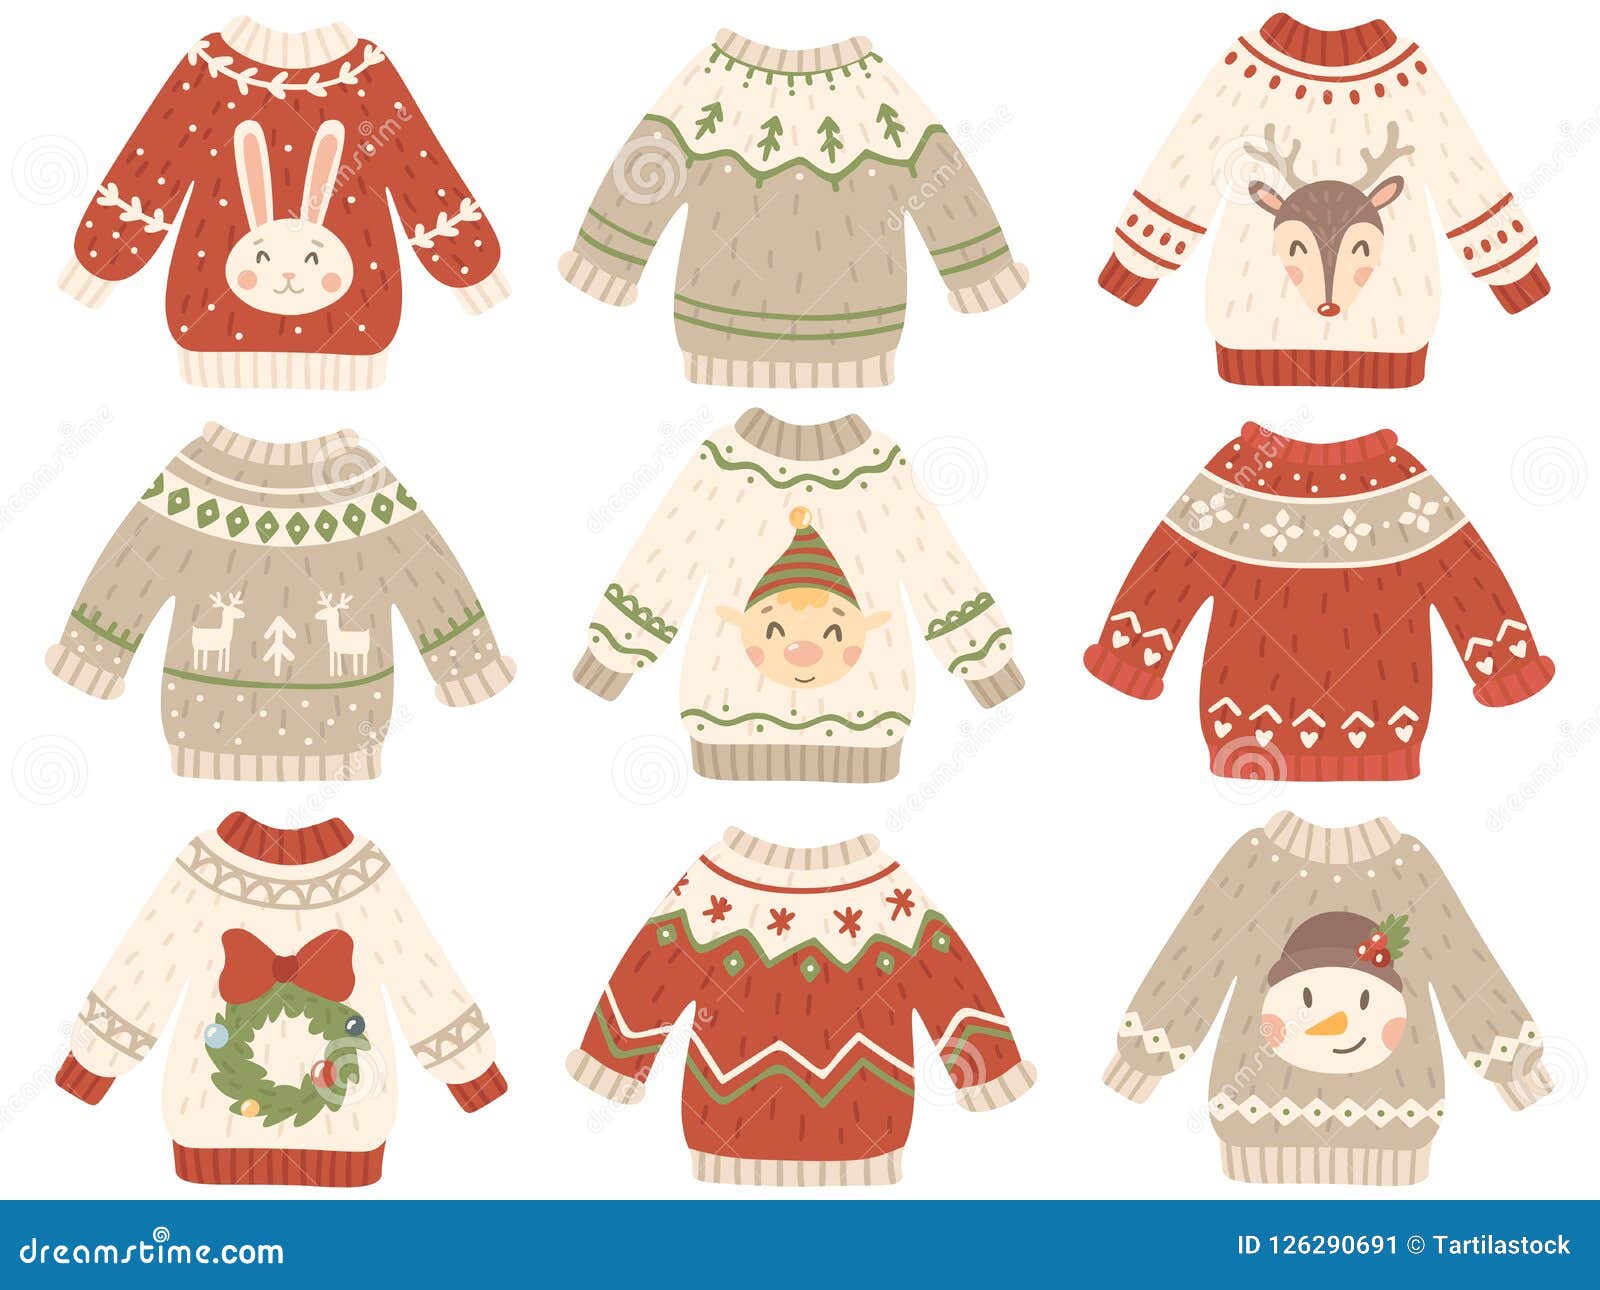 cute christmas jumper. xmas ugly sweater with funny snowman, santas helpers and santa beard. winter fashion tacky